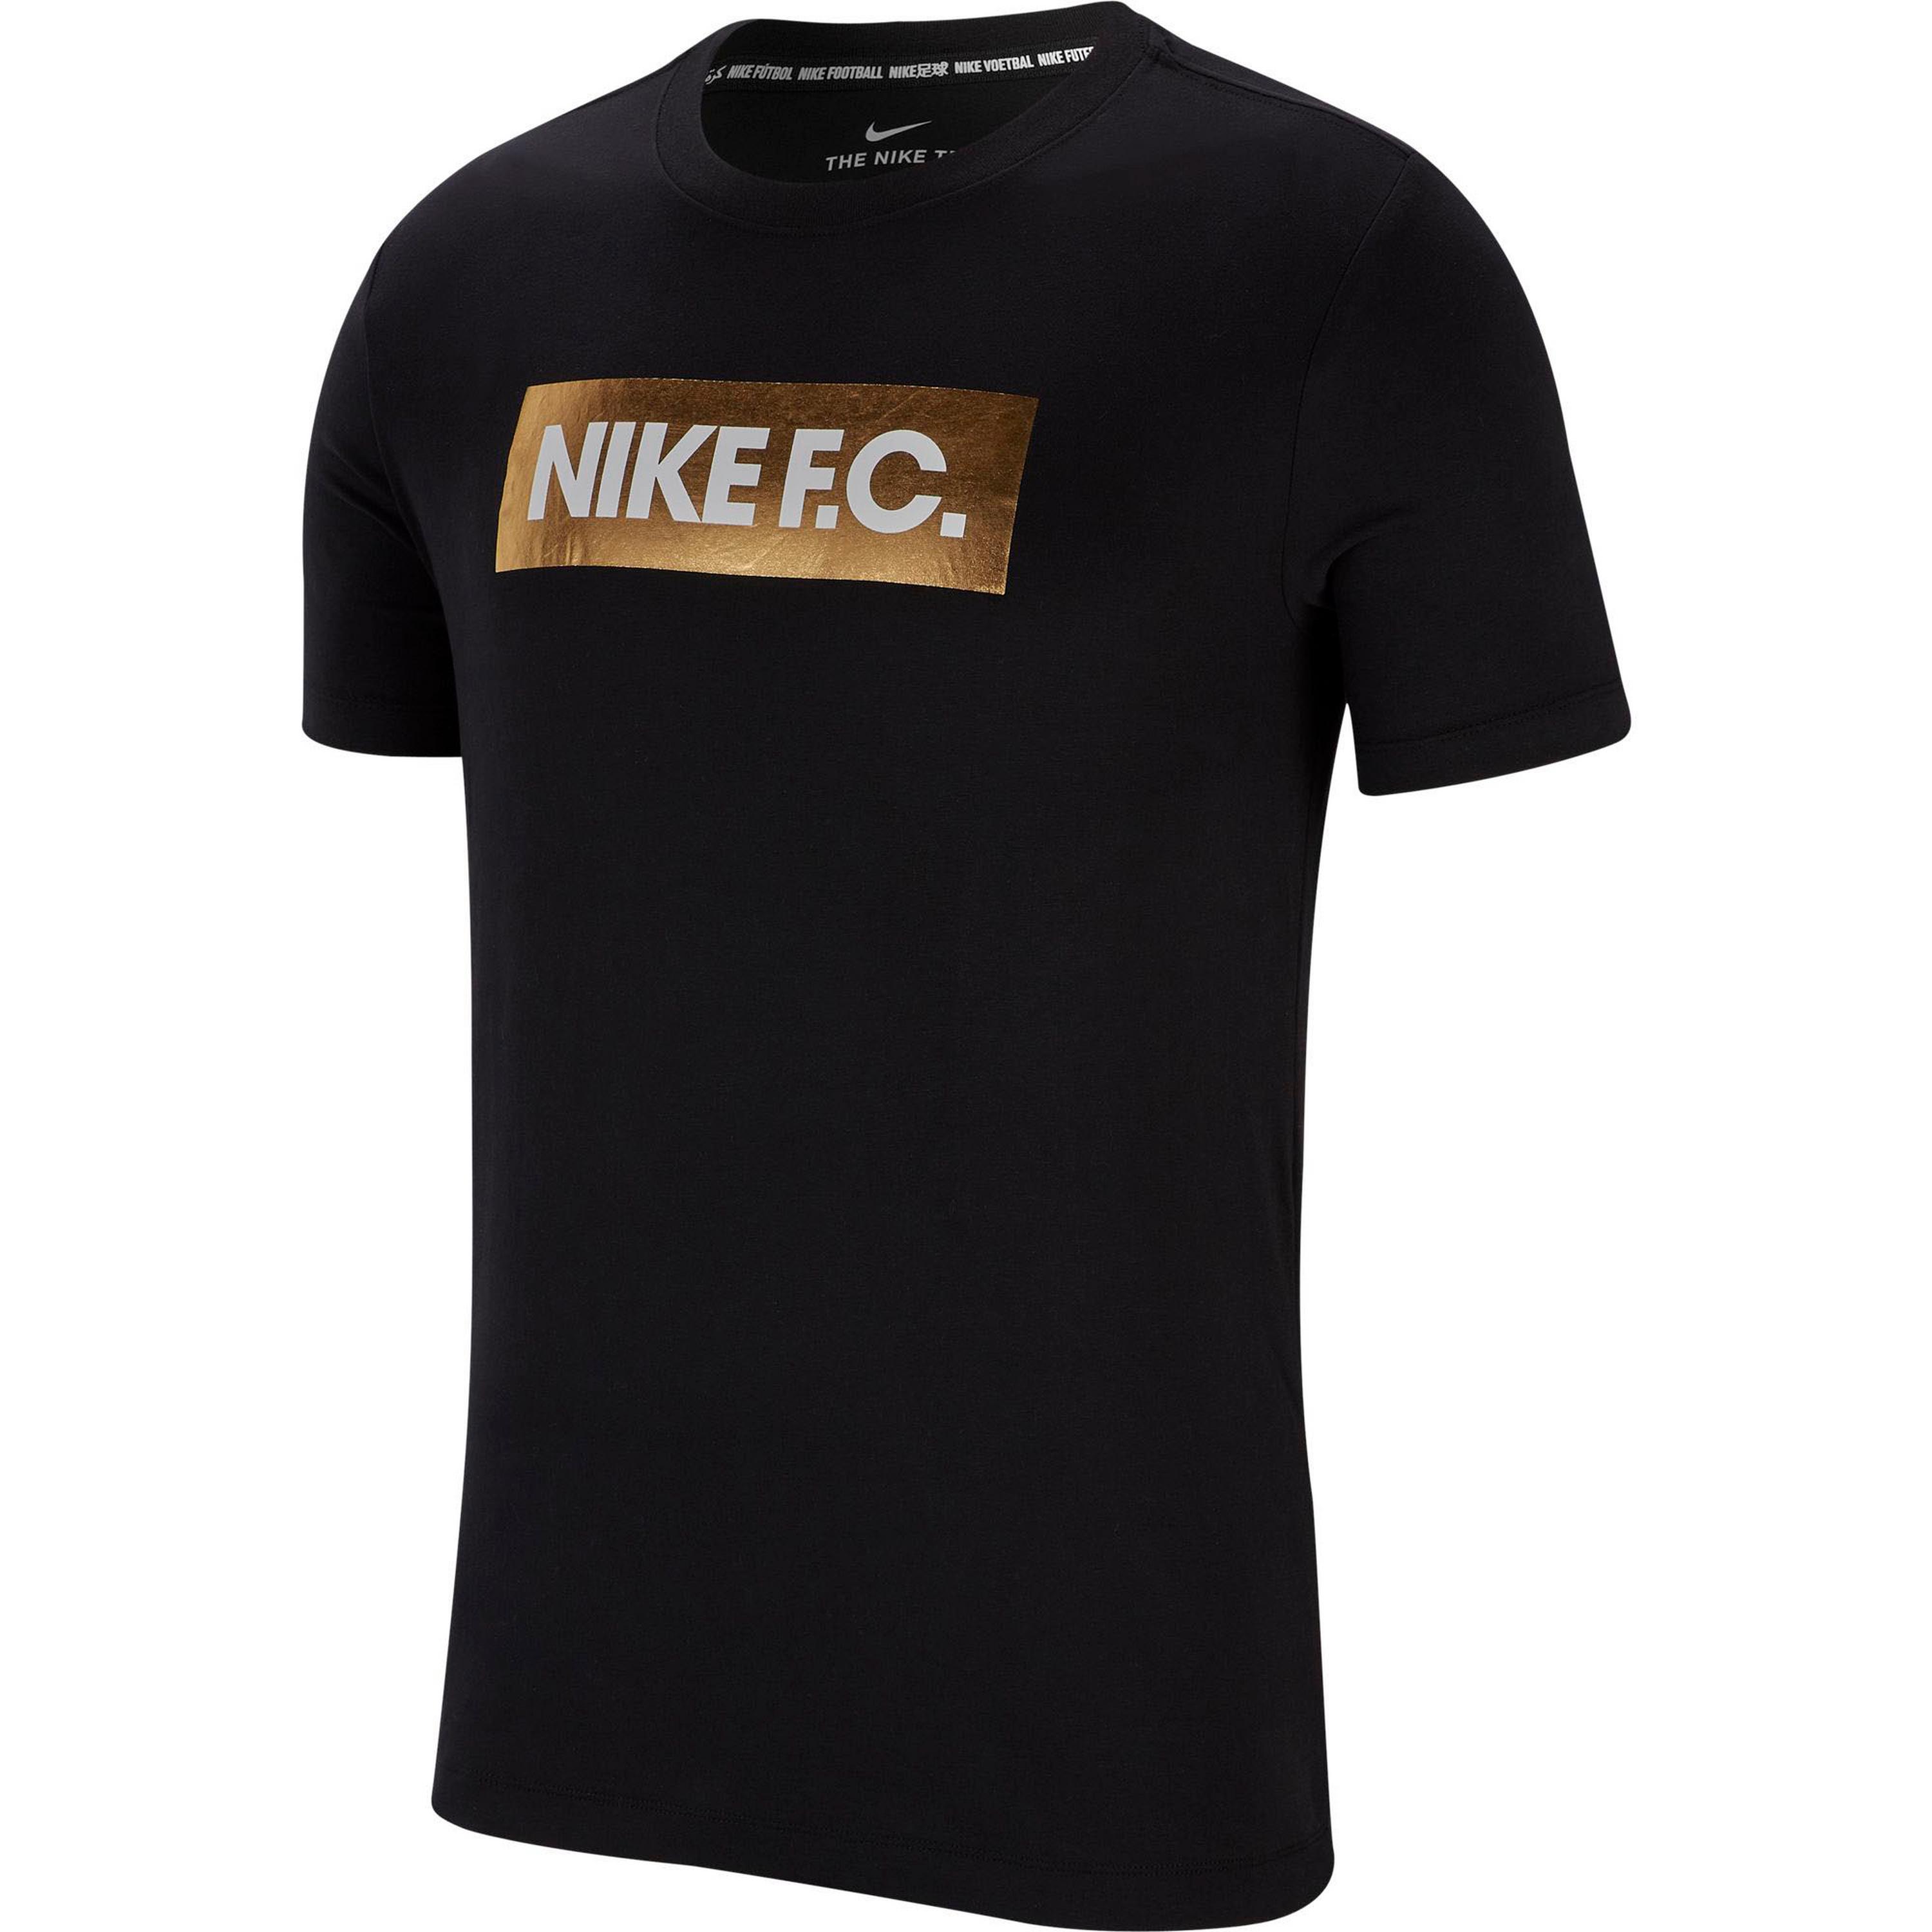 Nike NIKE FC Funktionsshirt Herren